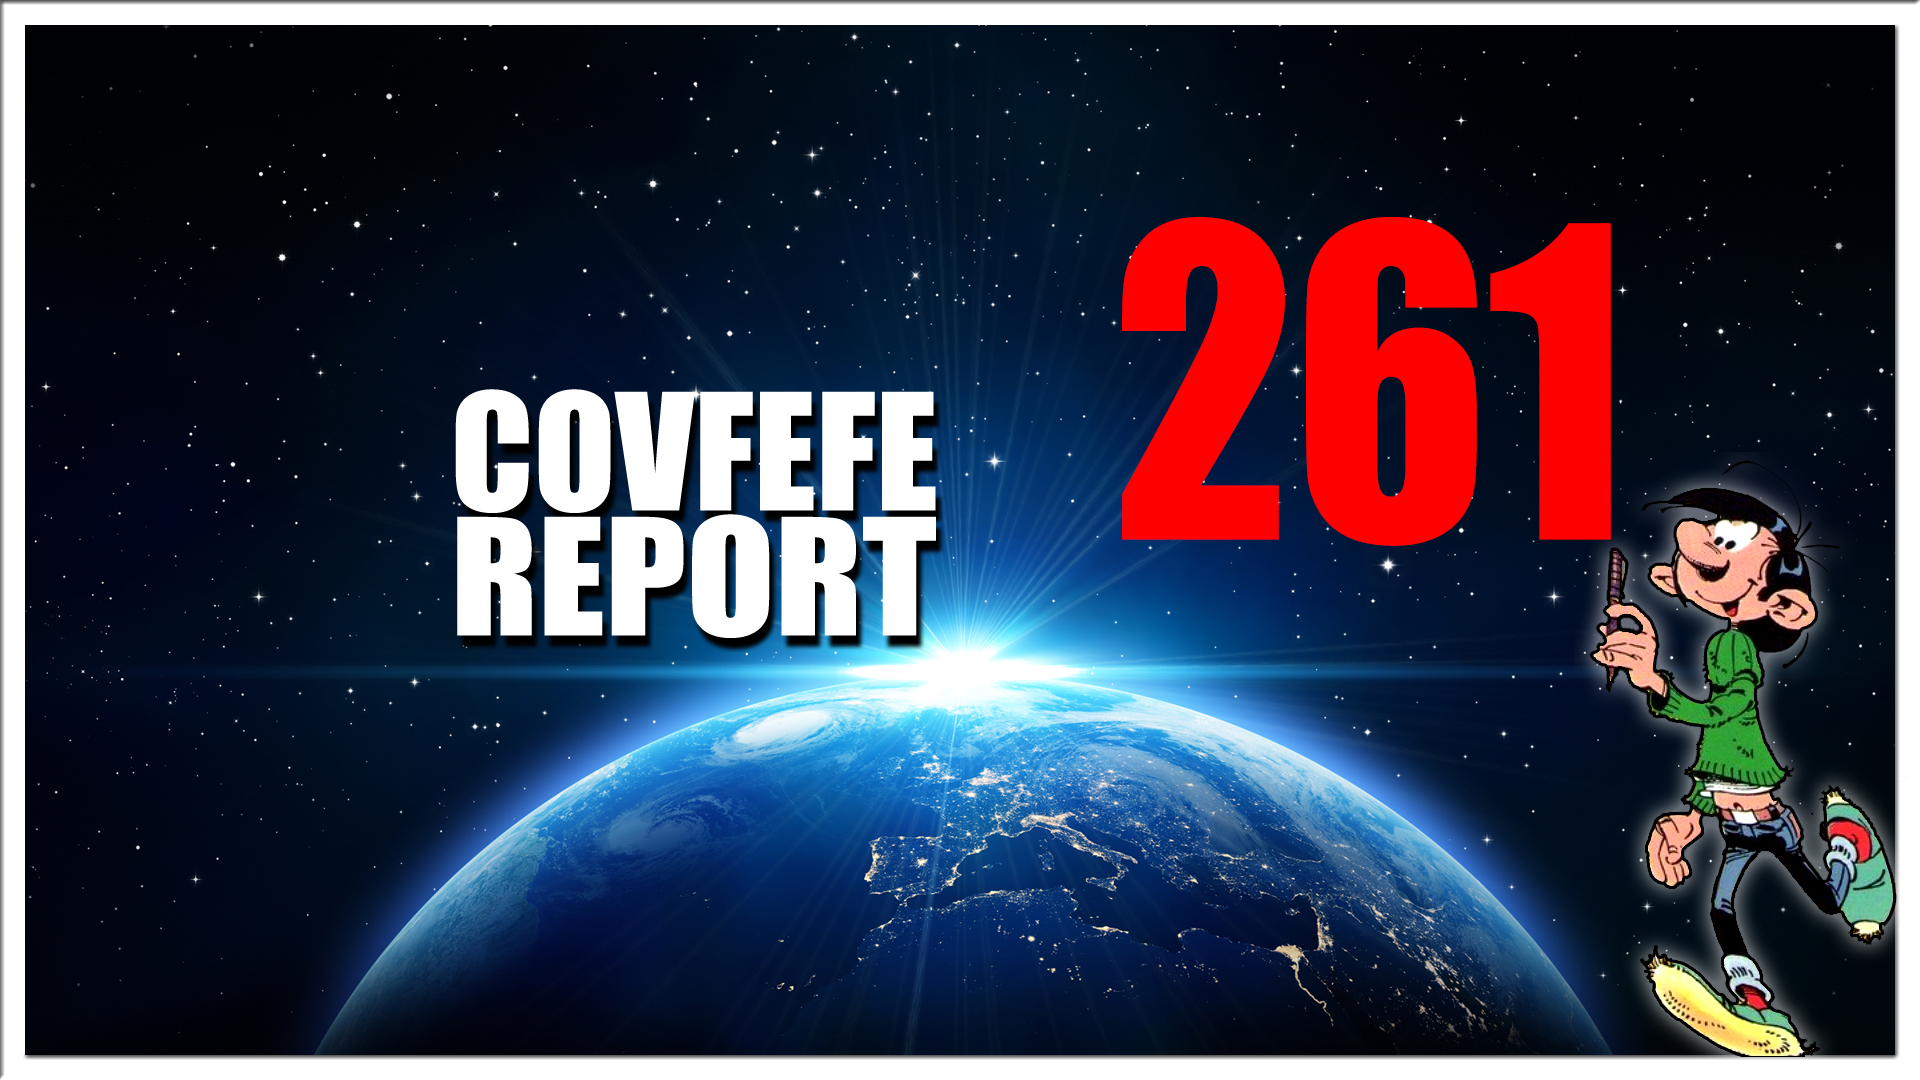 Covfefe Report 261. ngt